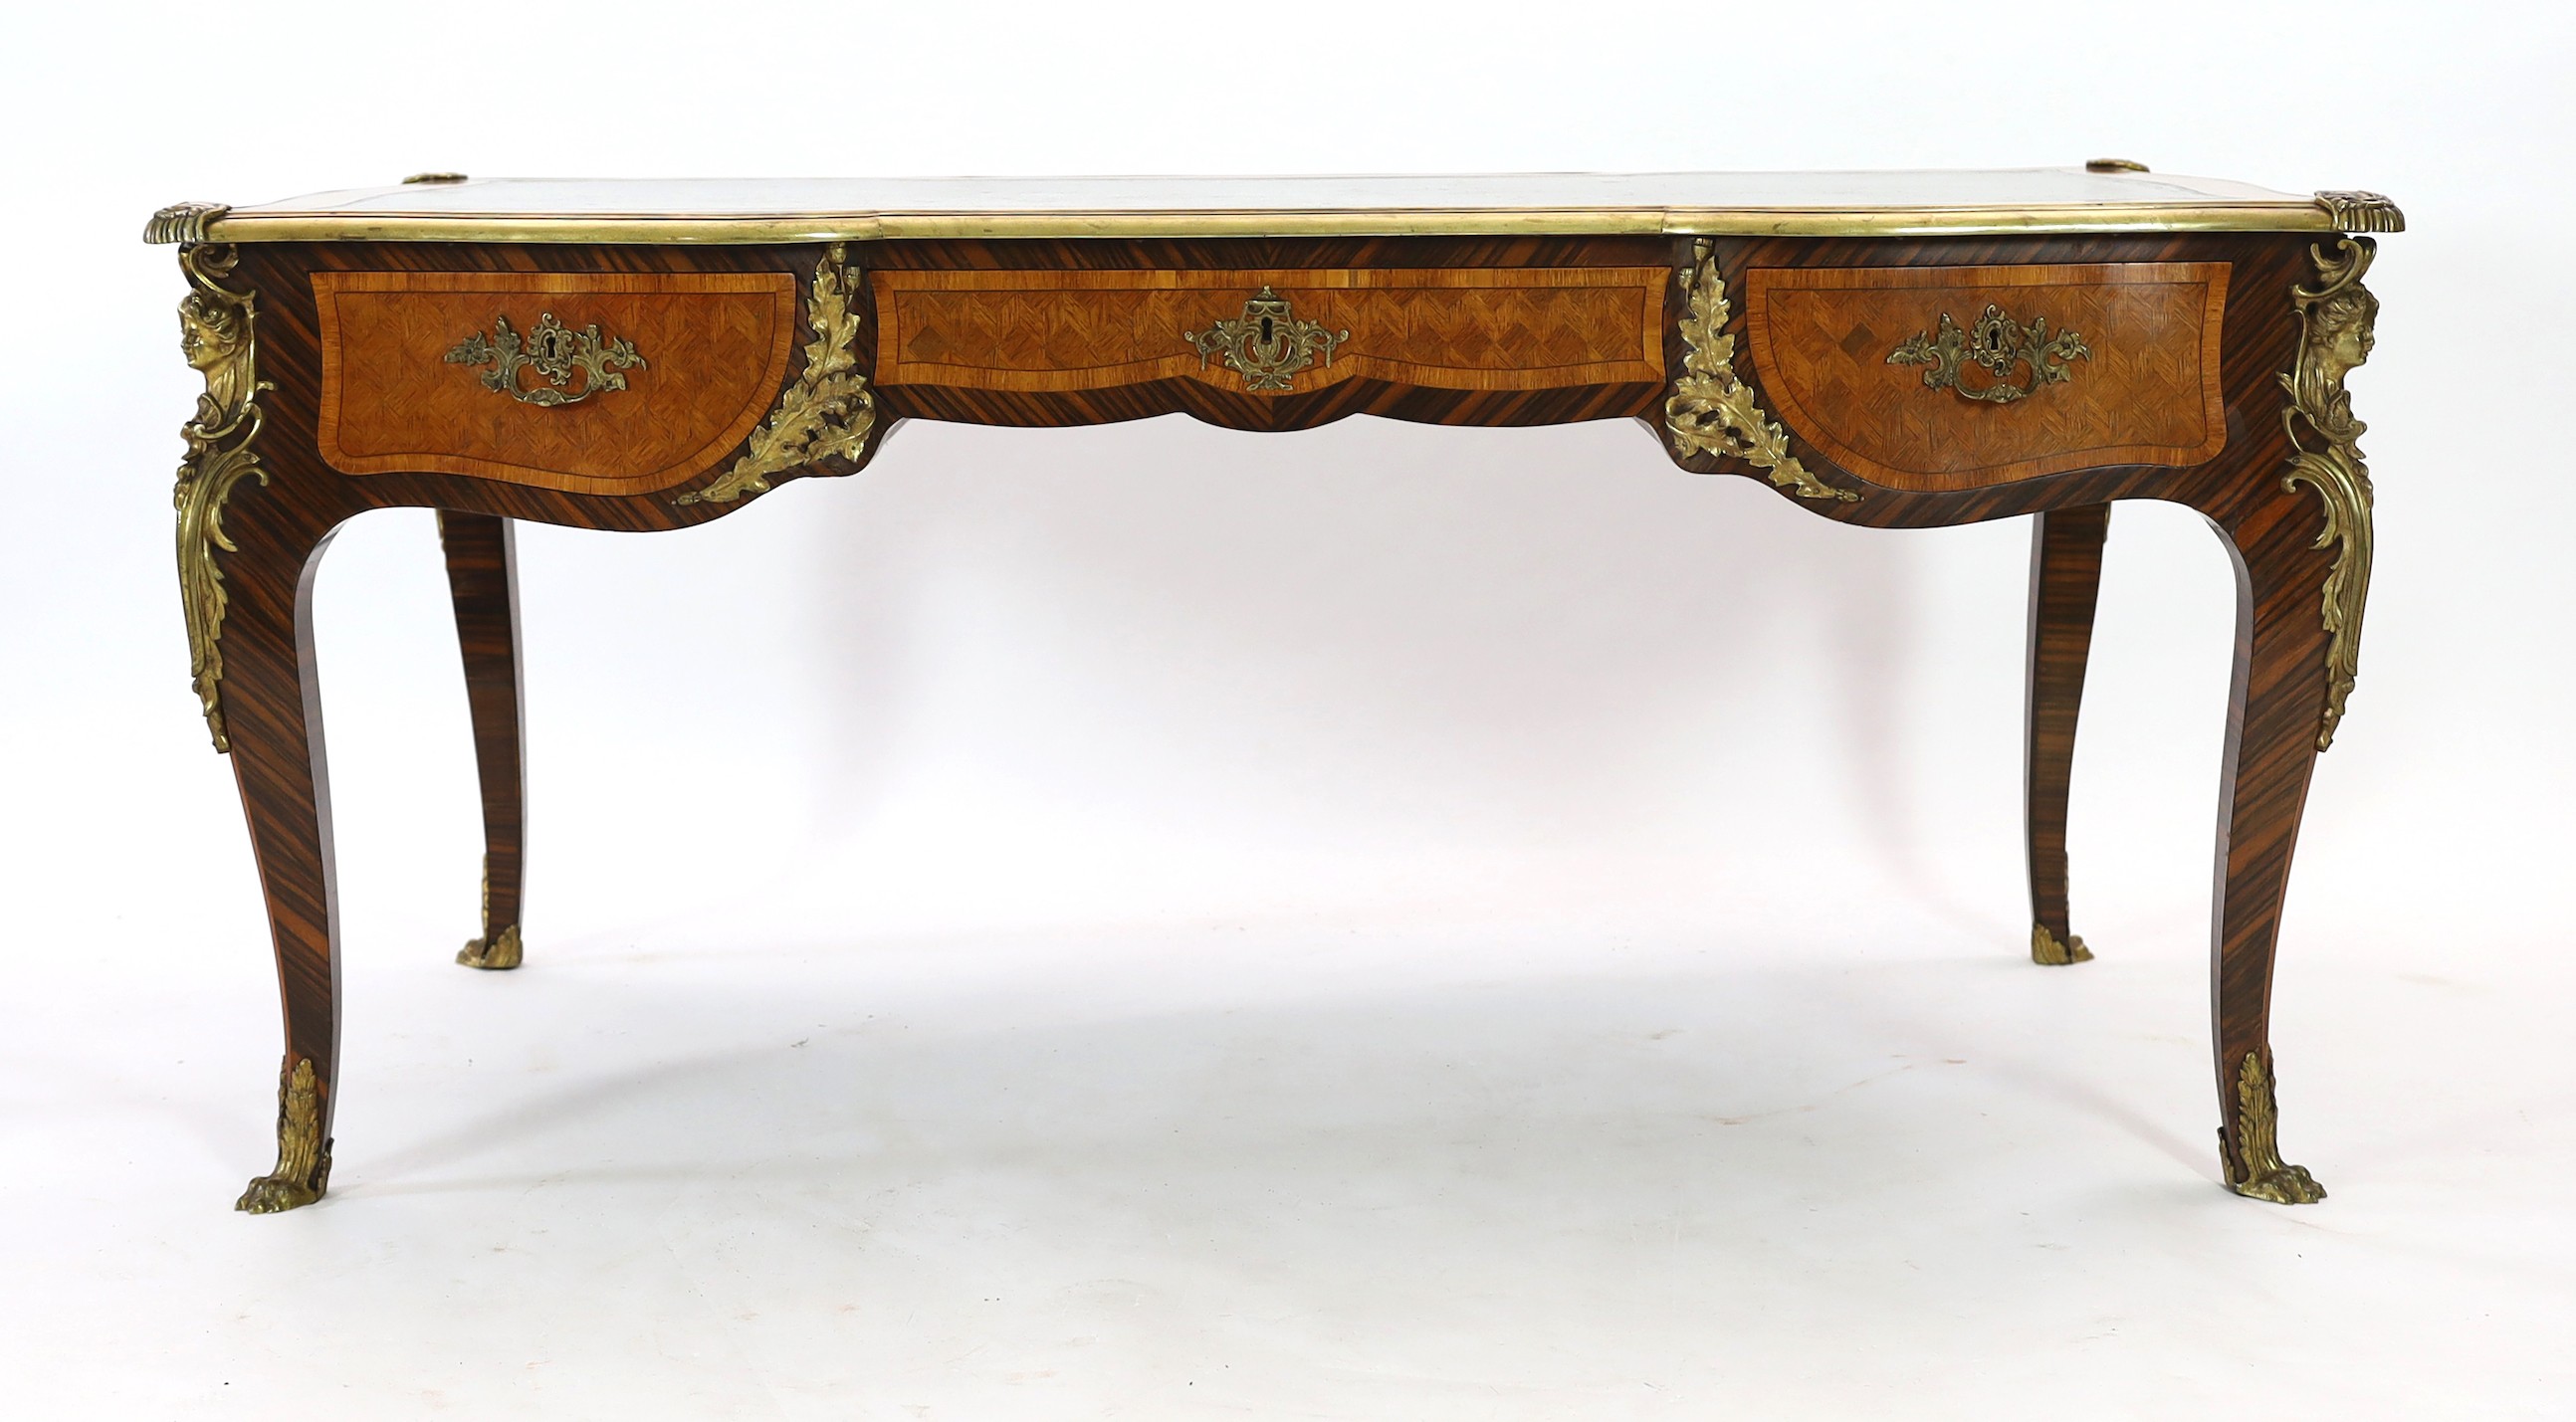 A Louis XVI style kingwood and parquetry bureau plat 166 x 90cm. Height 78cm.